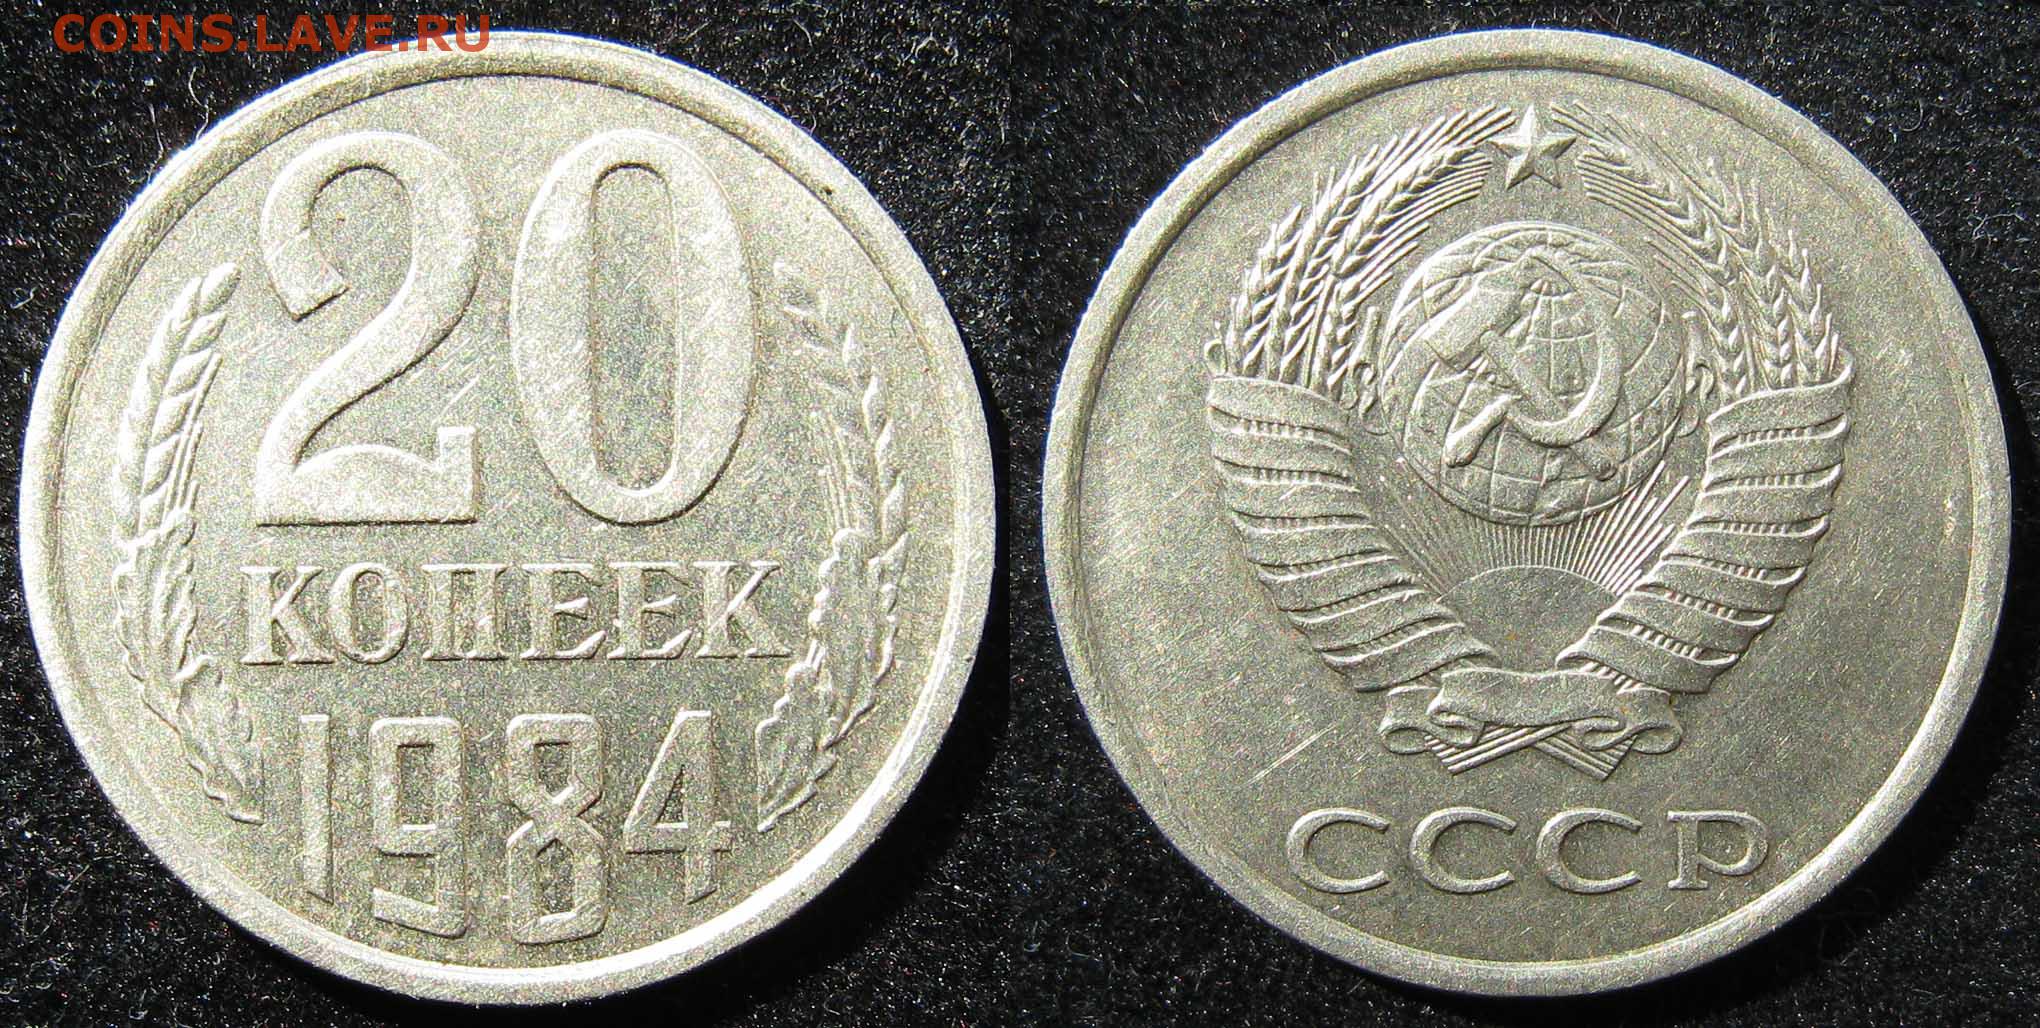 20 копеек пятьдесят лет. 15 Копеек 1942 года. 10 Копеек 1976. Монеты СССР 20 копеек 1961. 15 Копеек 1983 UNC.